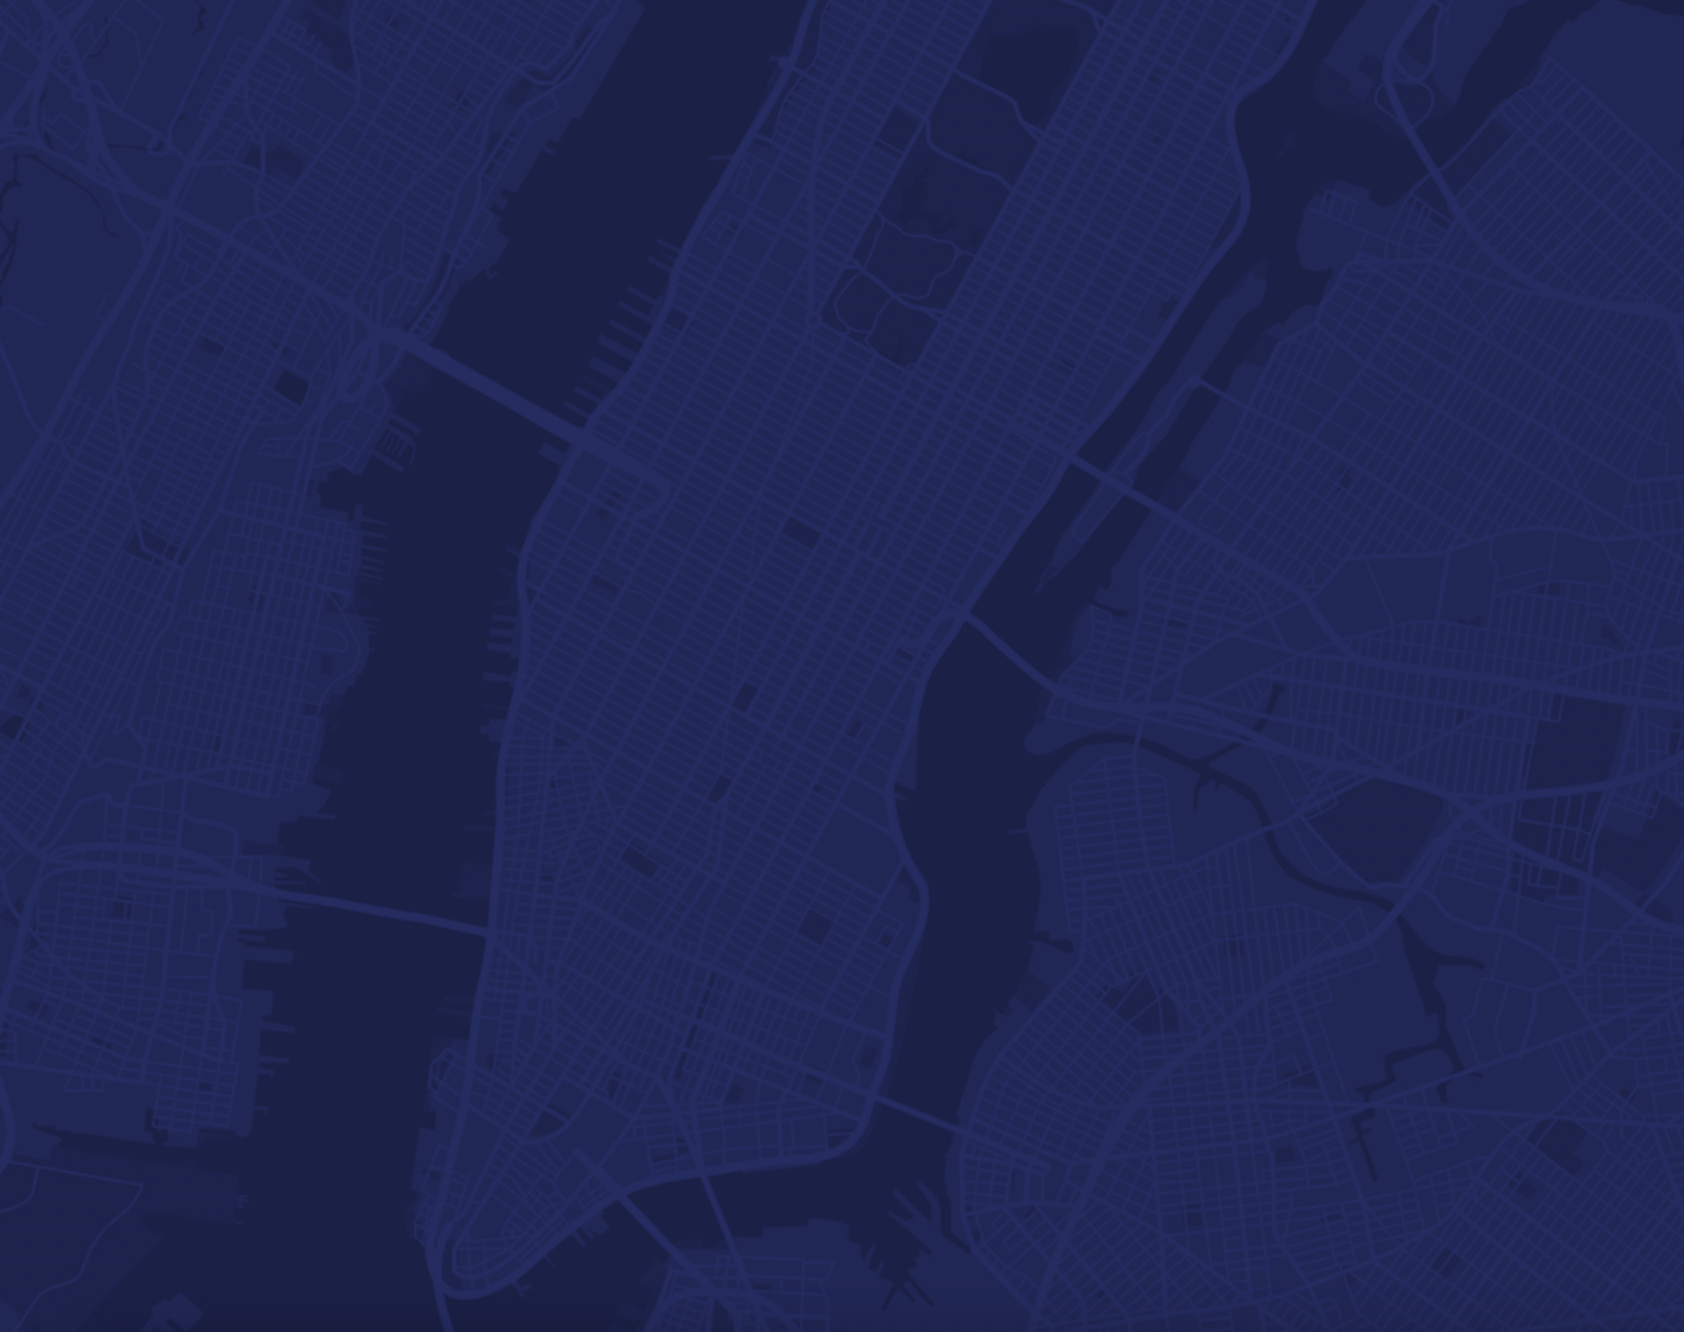 Blue Manhattan Map